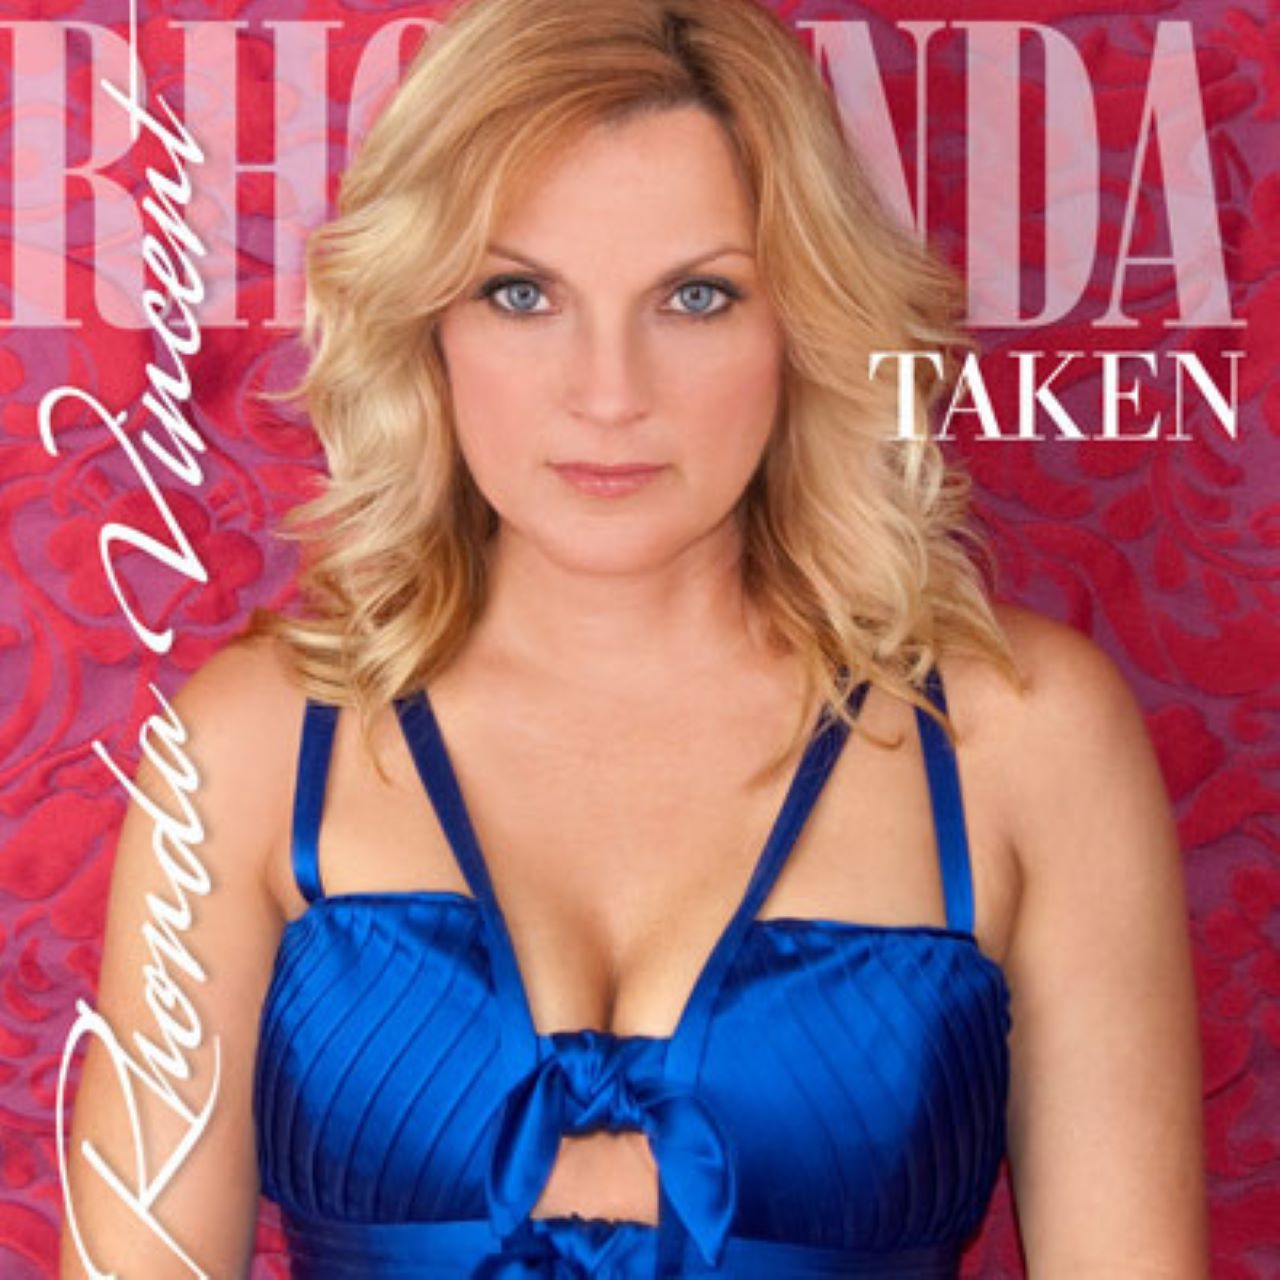 Rhonda Vincent - Taken cover album